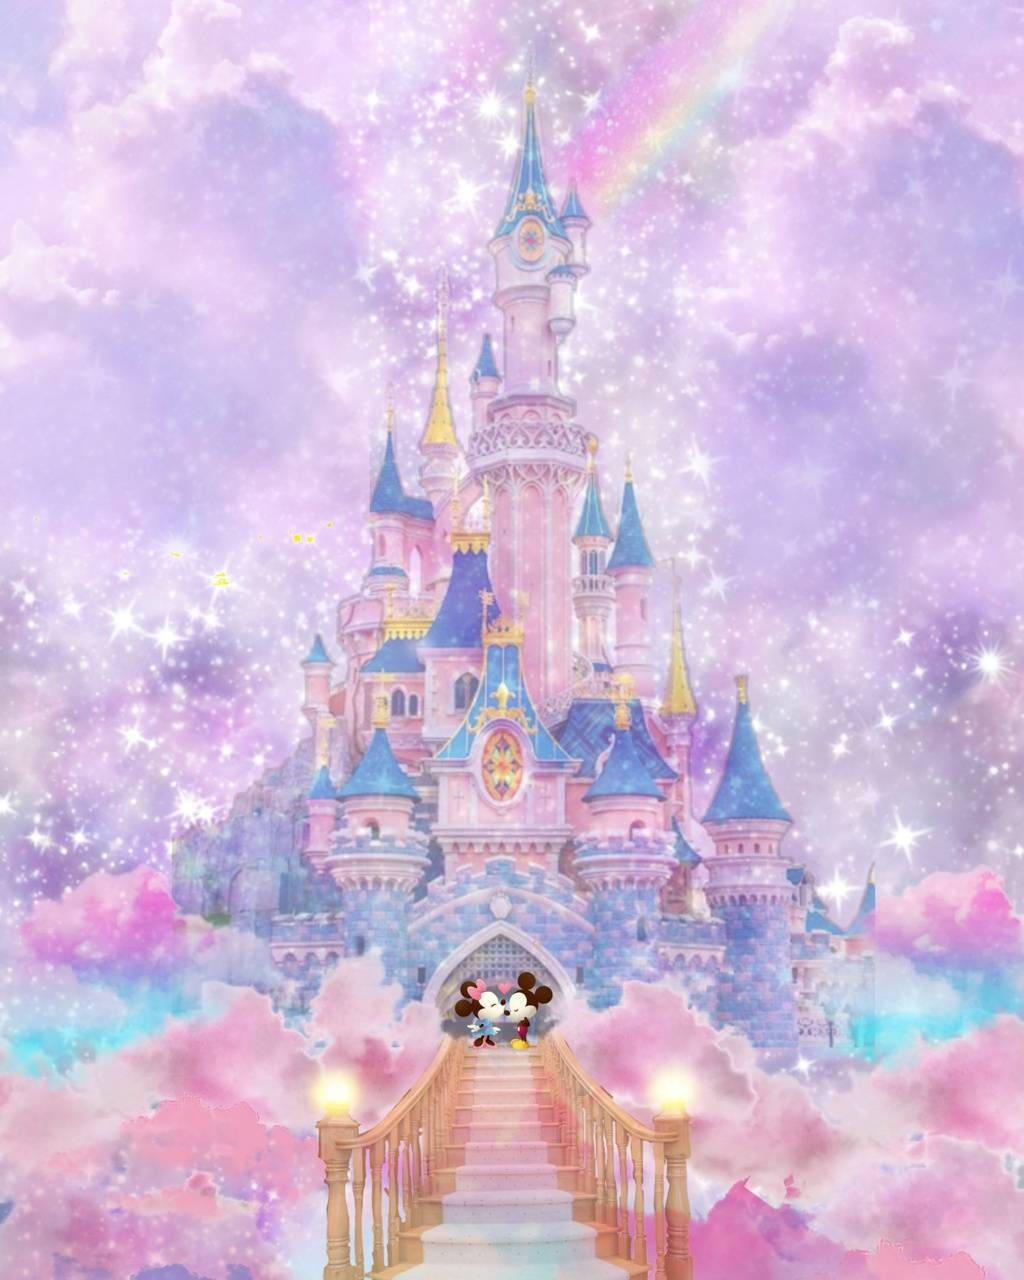 Galaxy-themed Disneyland Castle Background